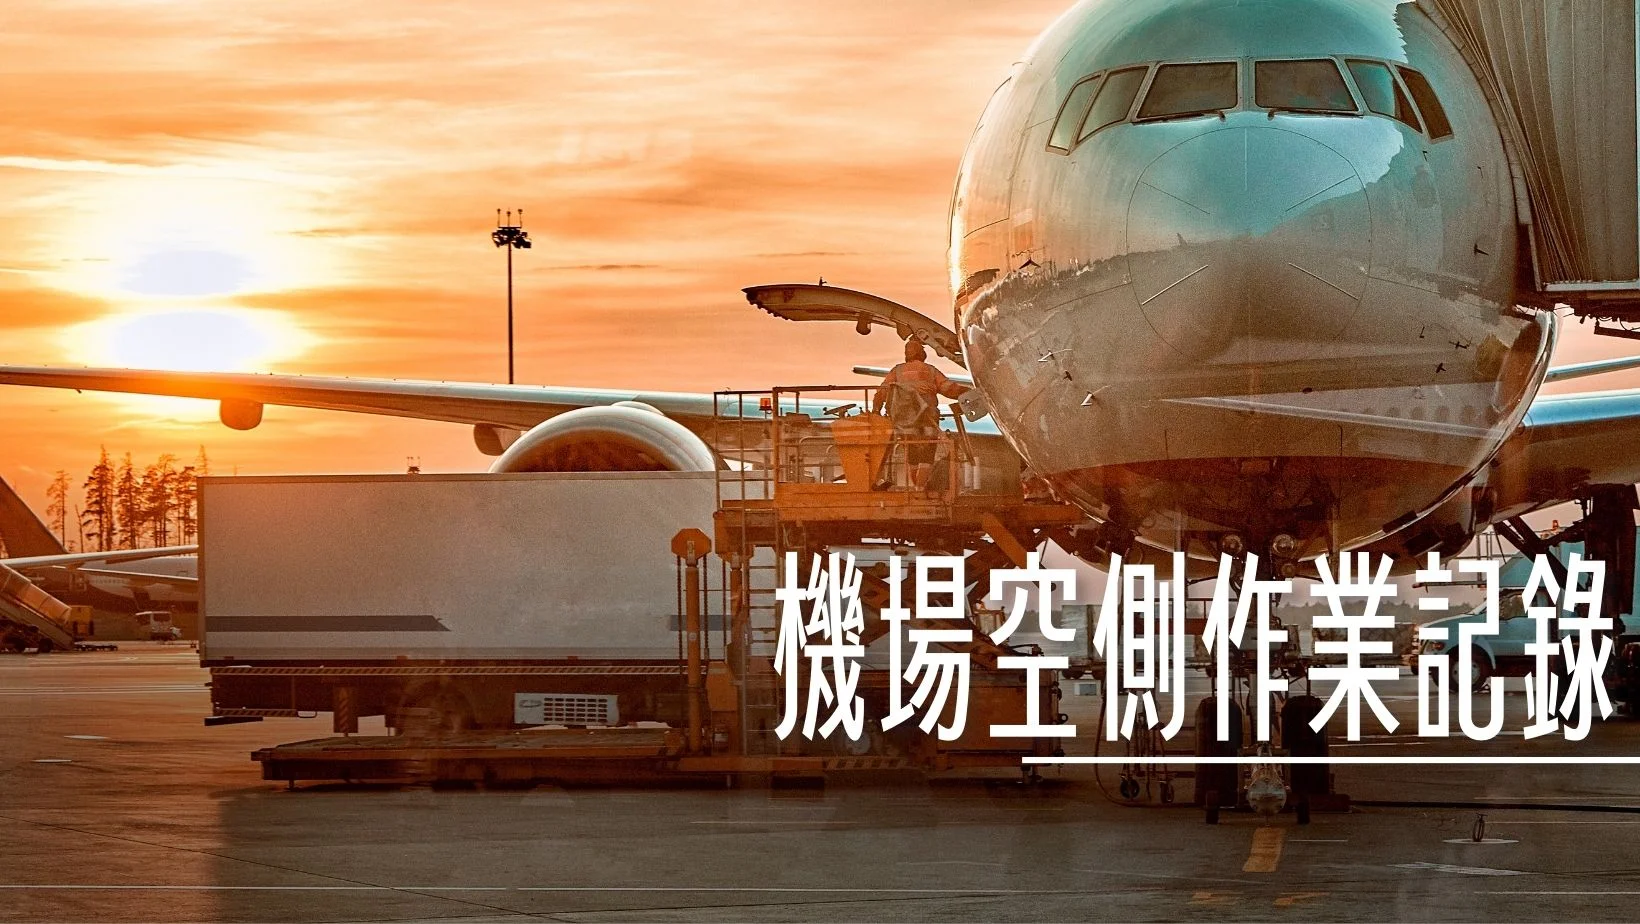 PVG,上海浦東機場,空側作業 @傑西大叔 x 這裡胡說